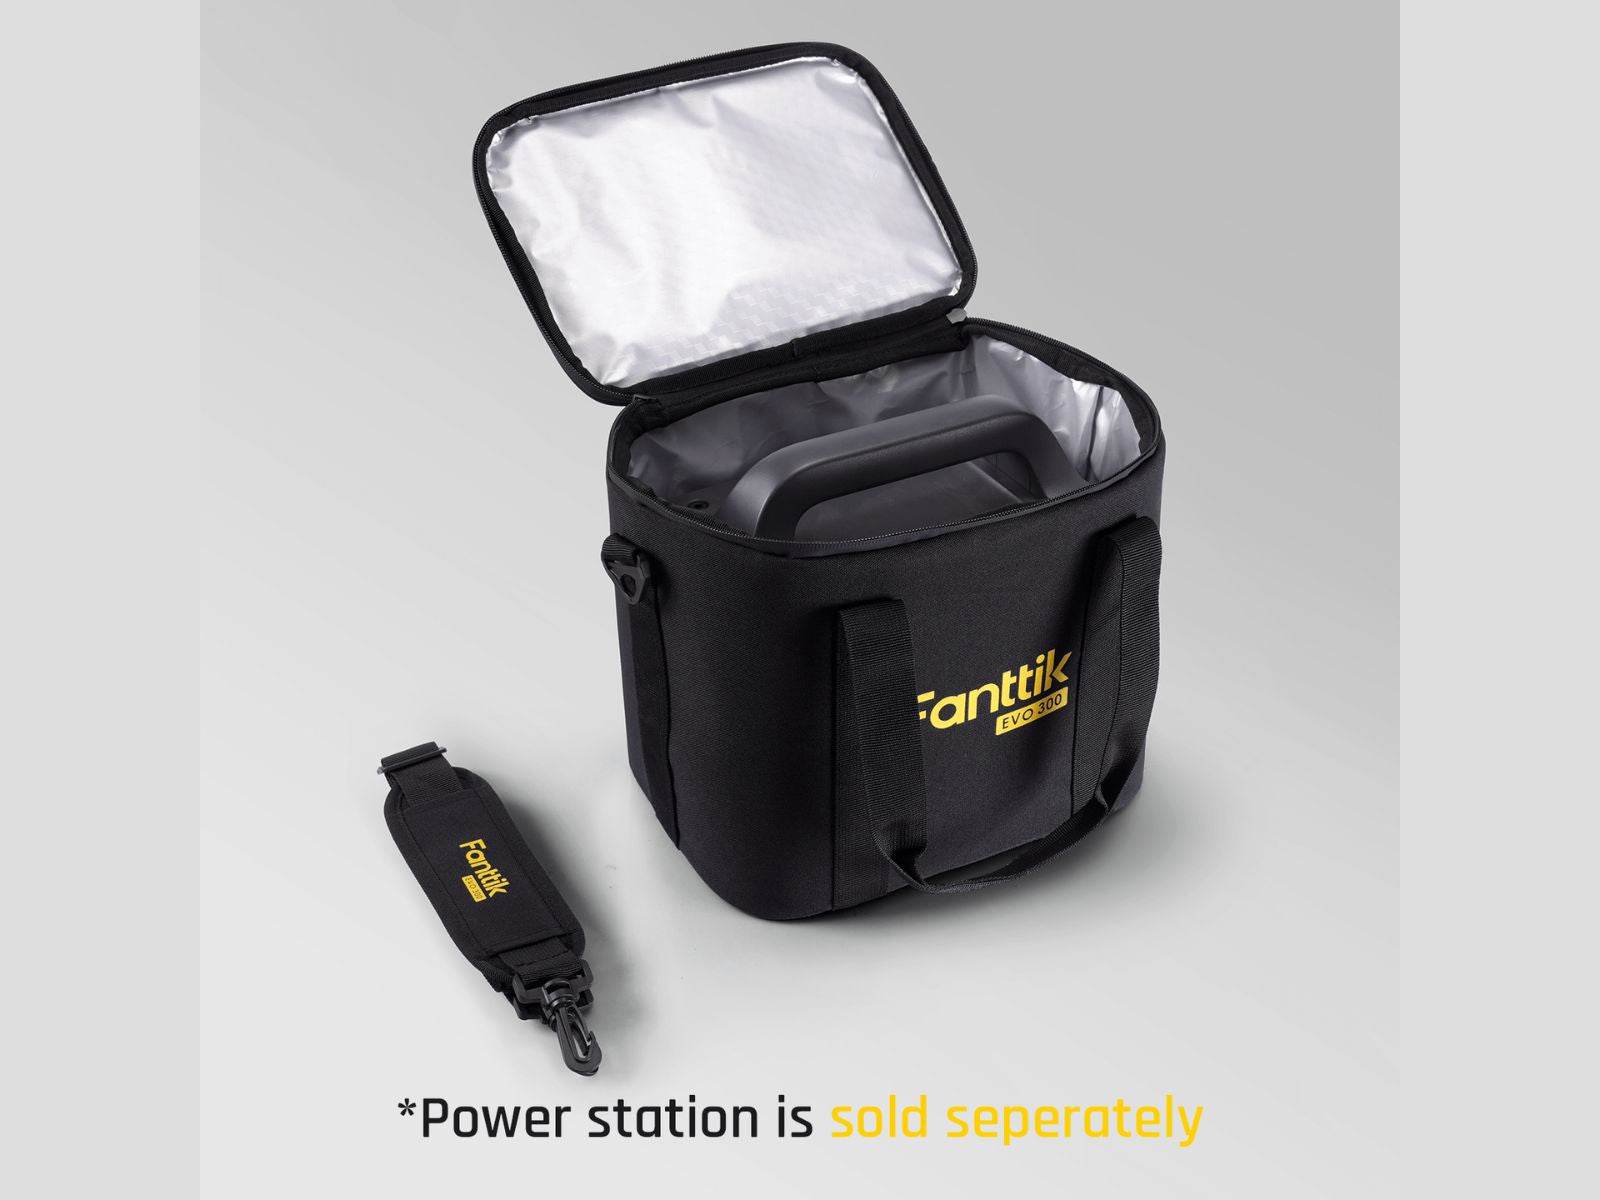 Fanttik Carrying Bag For X9 Ultra™ Tire Inflator (Bag Only)